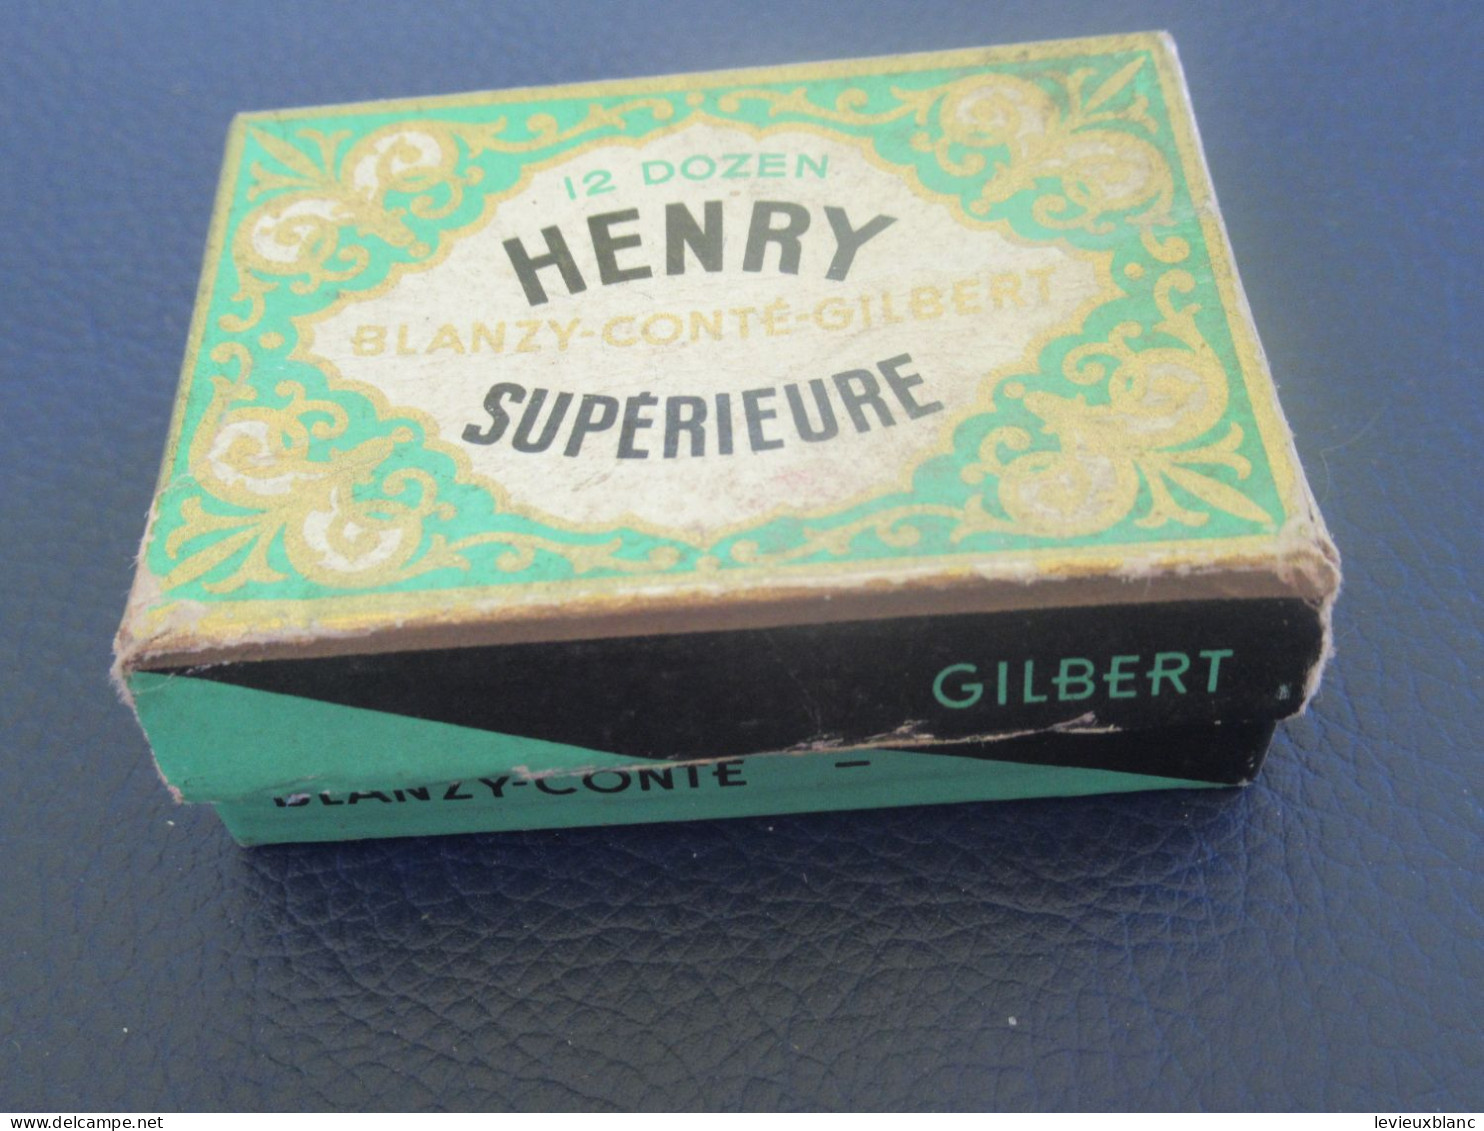 Petite Boite Carton De Plumes/HENRY Supérieure/ Blanzy-Conté-Gilbert/ Vers 1950-1960      CAH365 - Vulpen